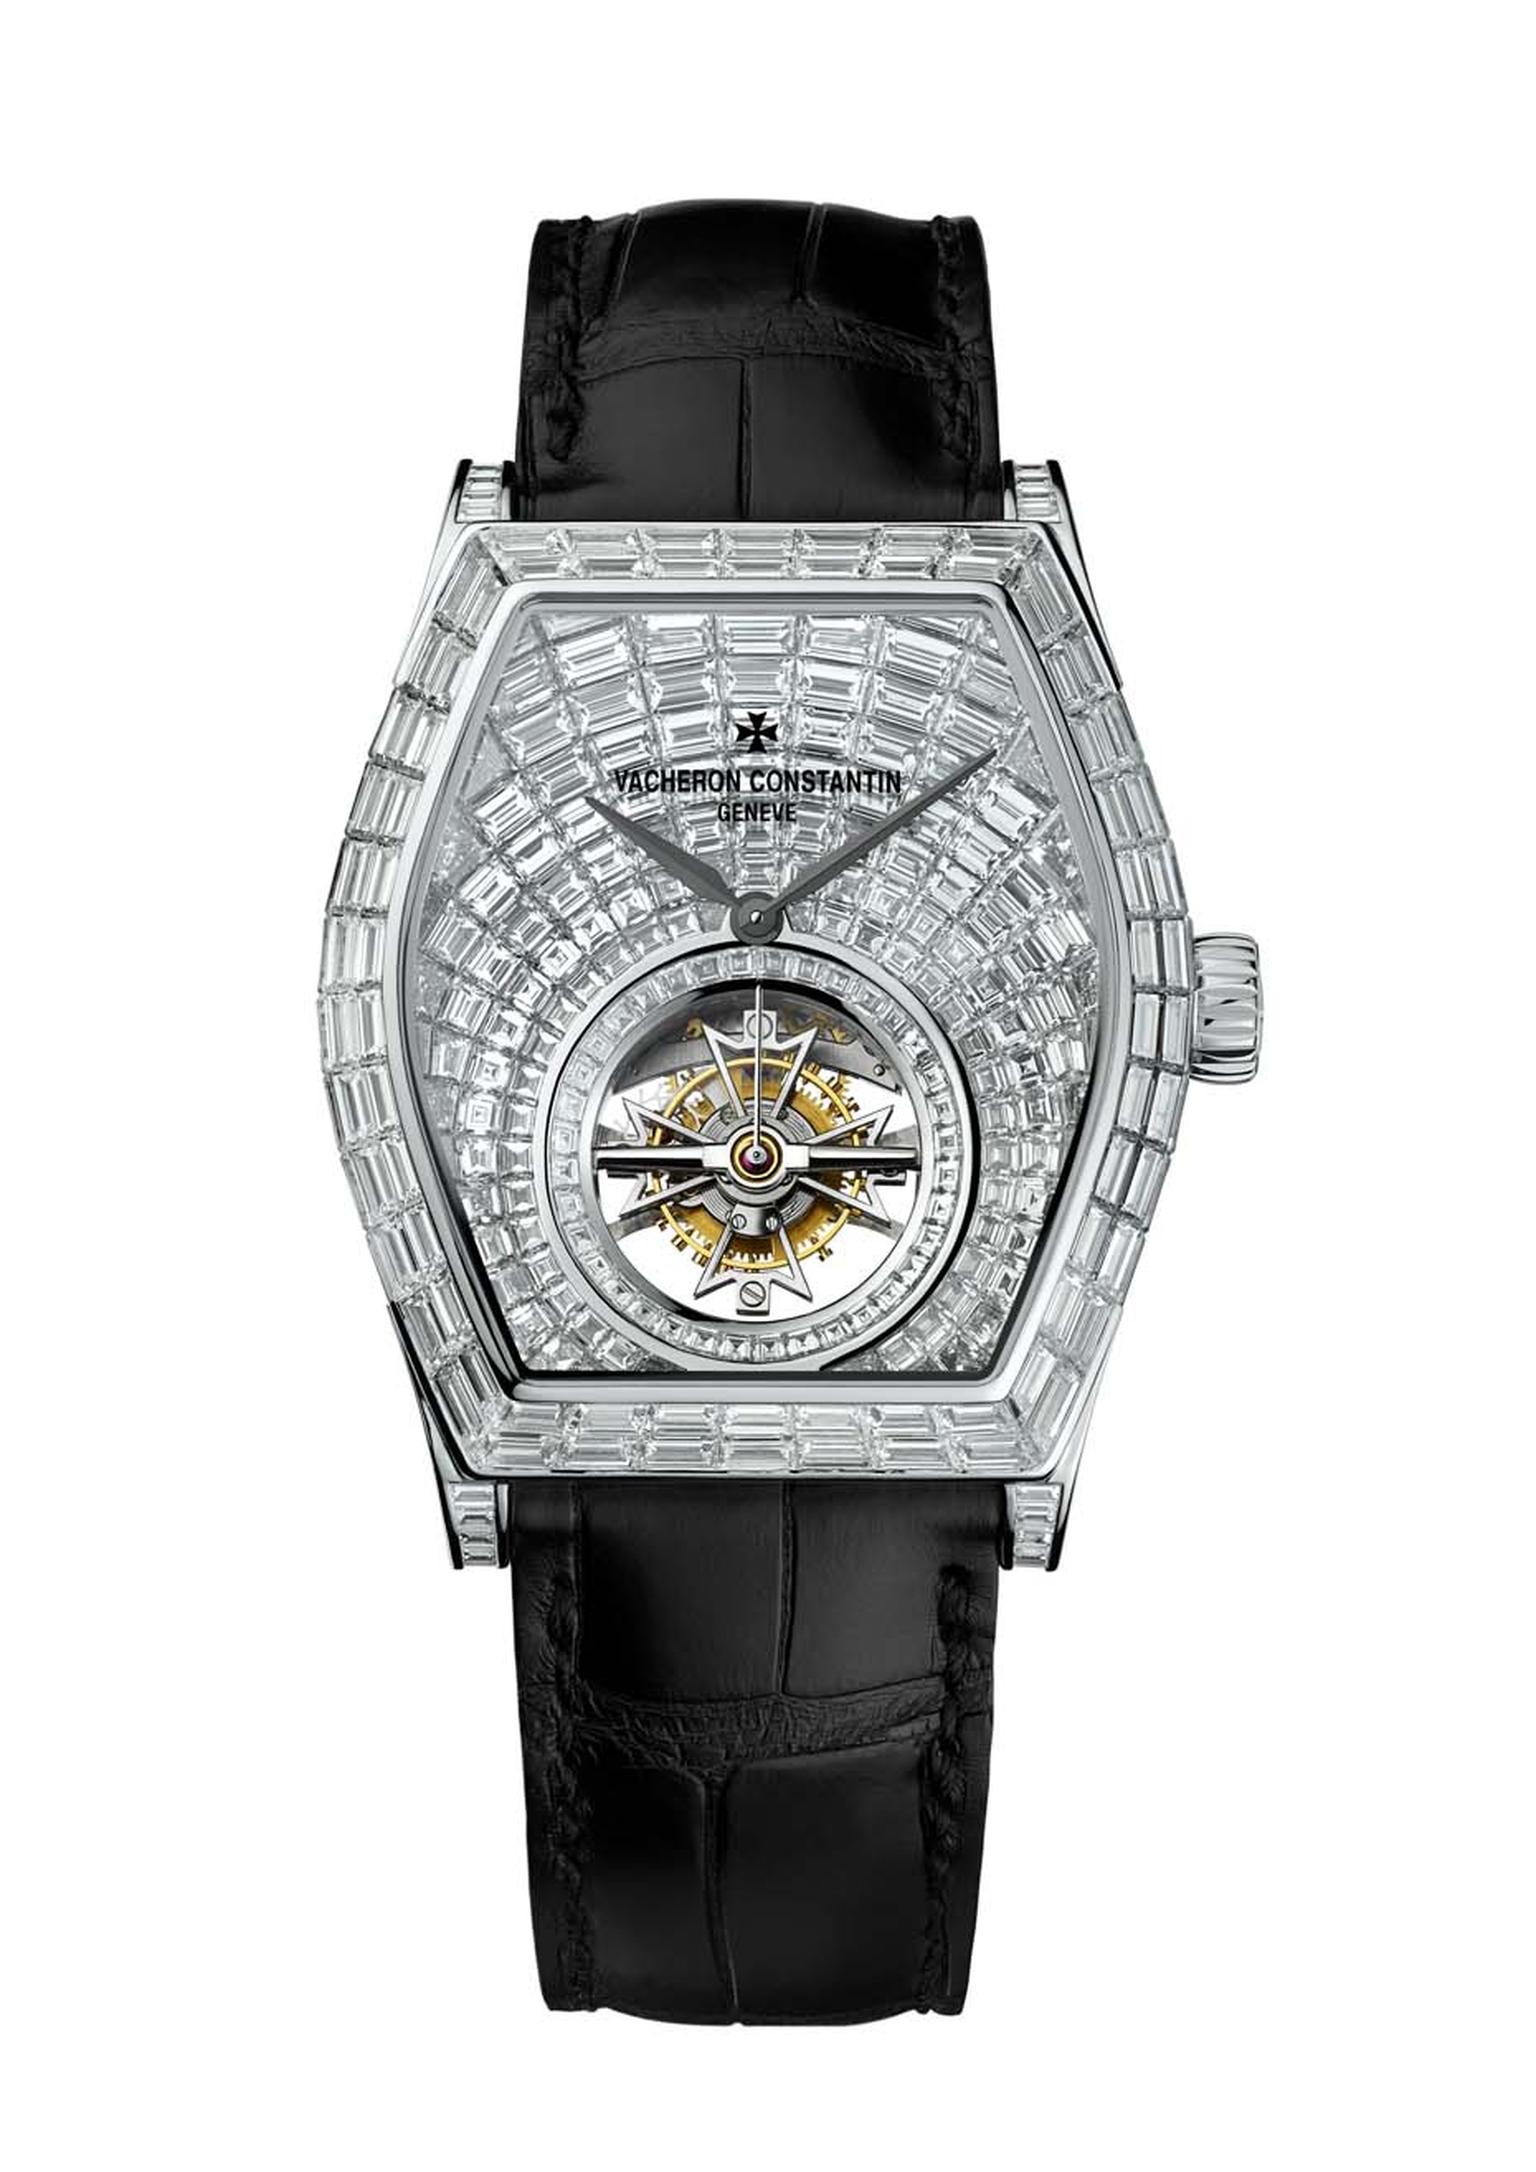 Vacheron Constantin Malte Tourbillion High Jewellery watch features 418 baguette-cut diamonds.